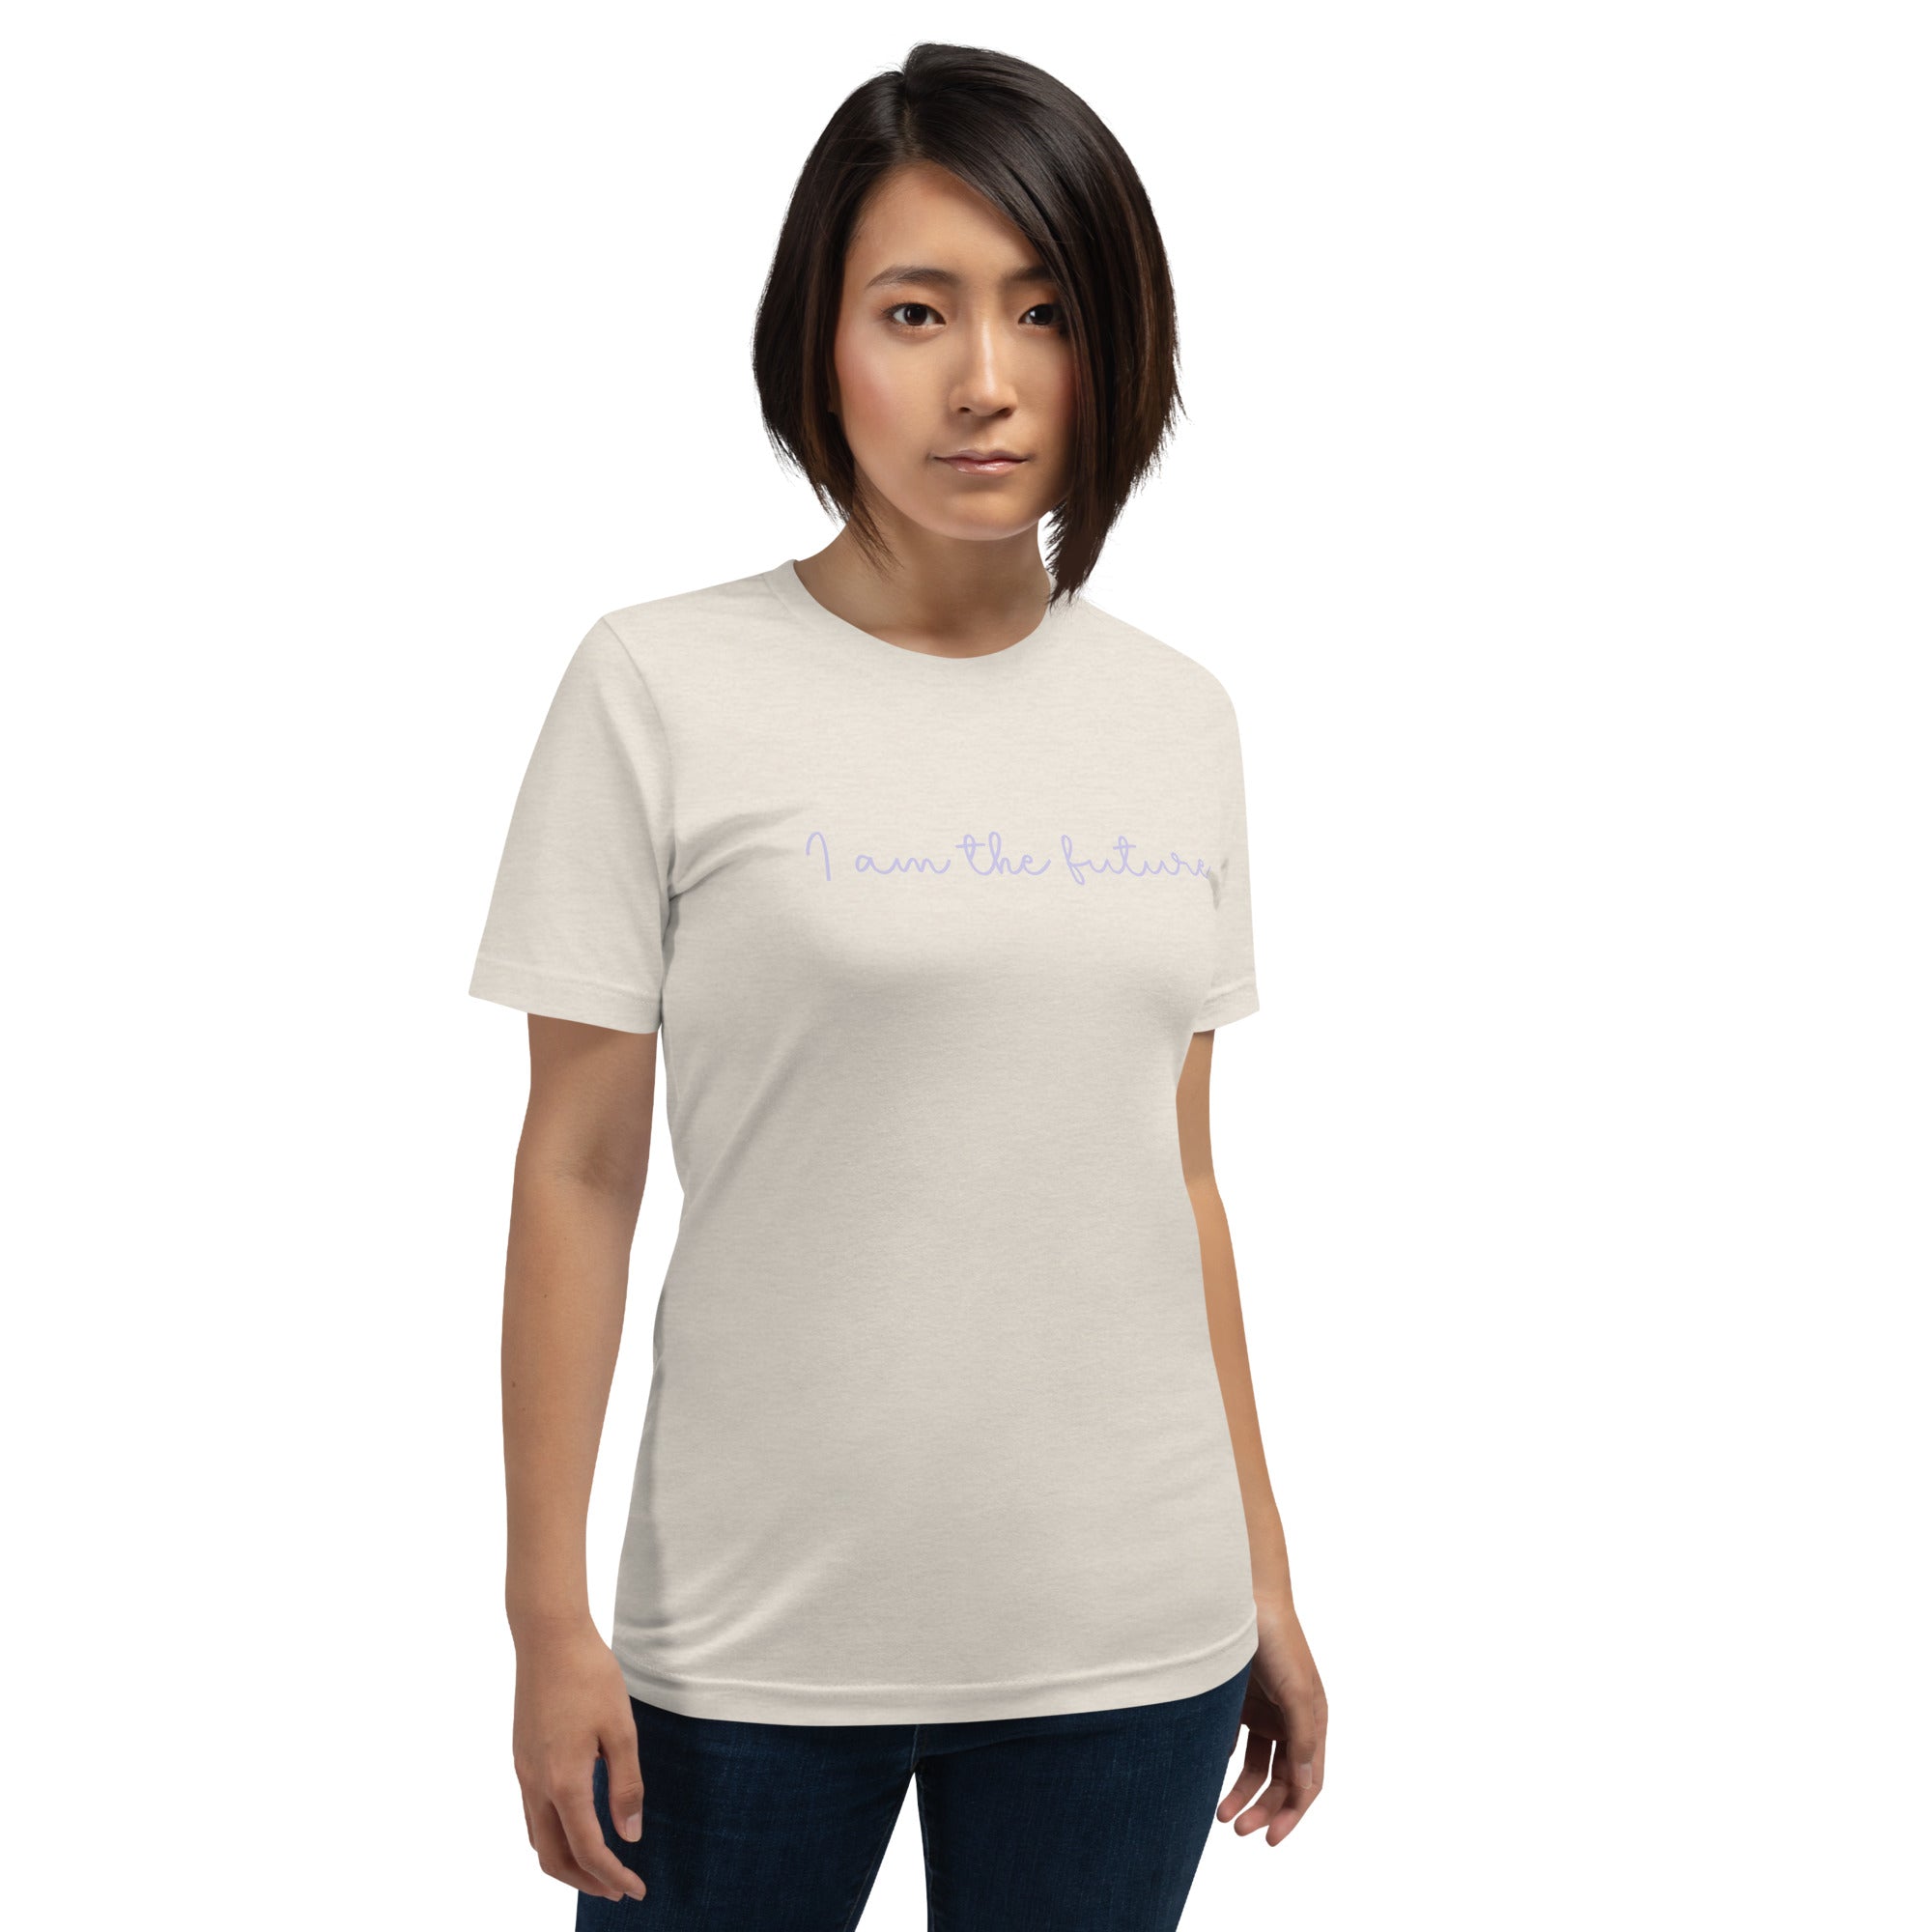 I Am The Future, Premium Short-Sleeve Unisex T-Shirt | Positive Affirmation Tee